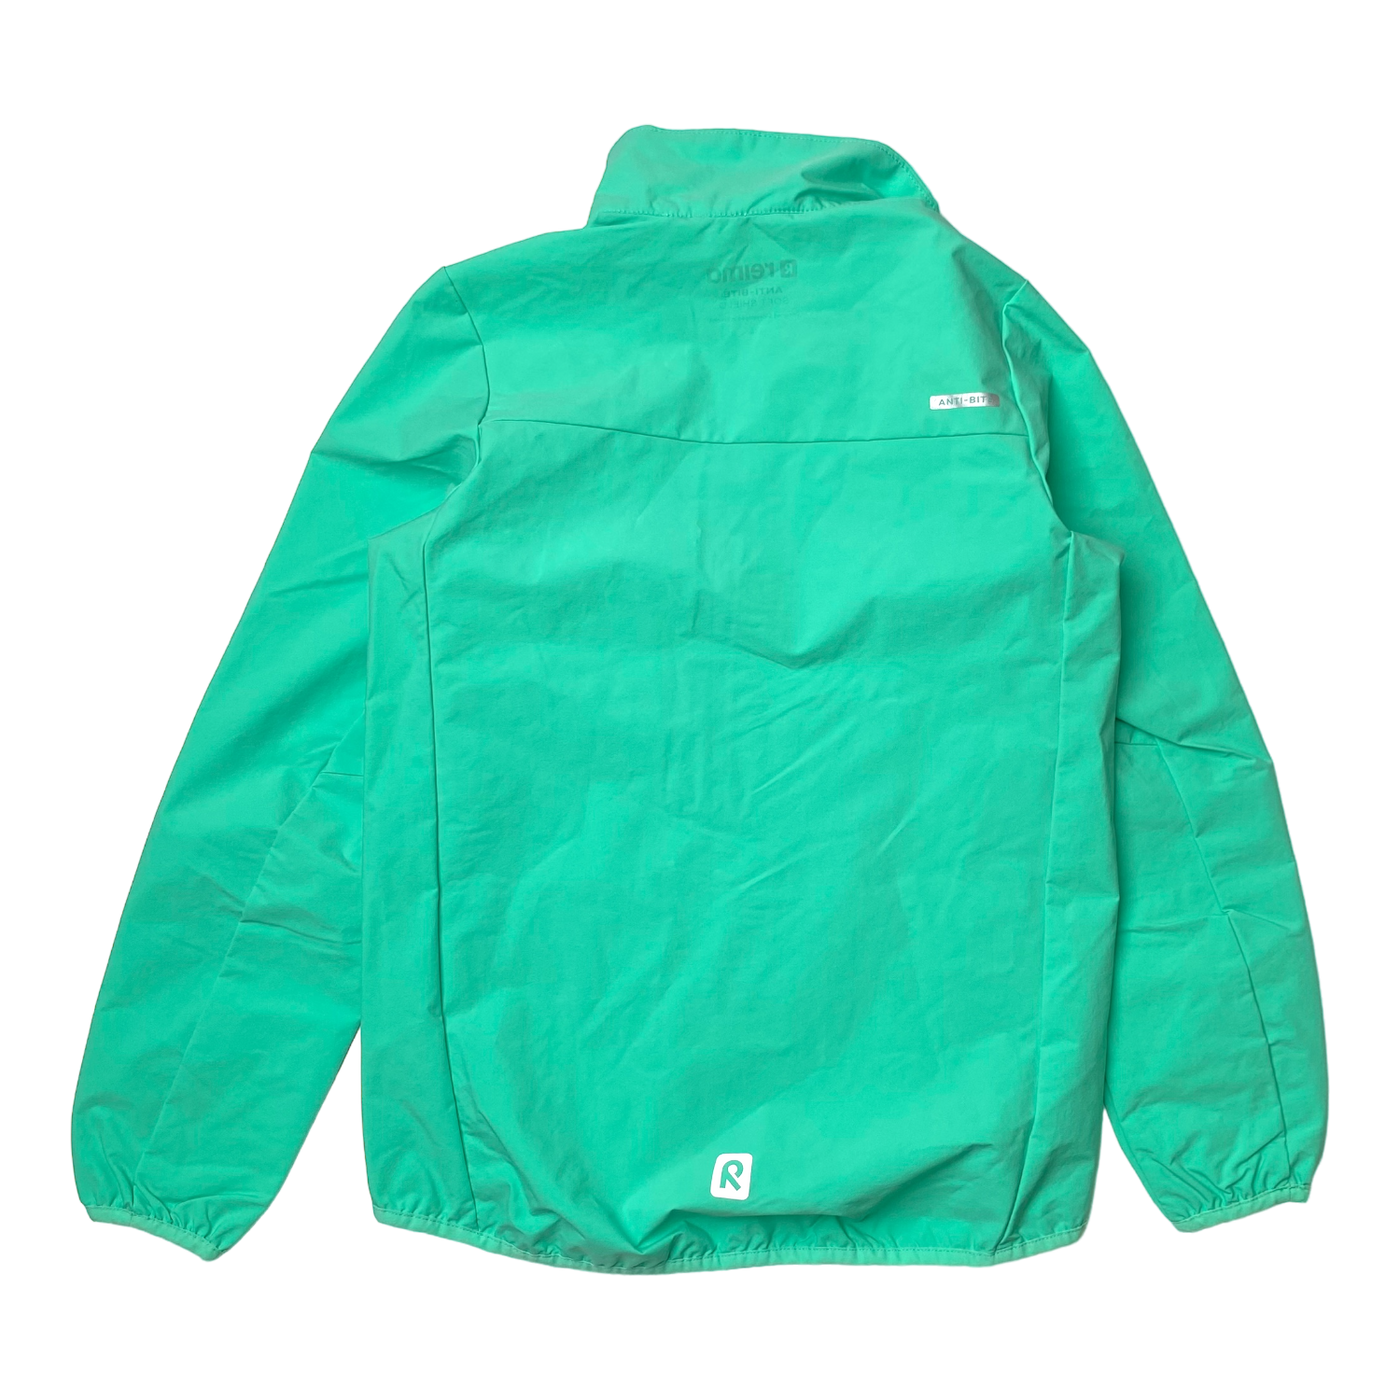 Reima Mantereet jacket, turquoise | 134cm